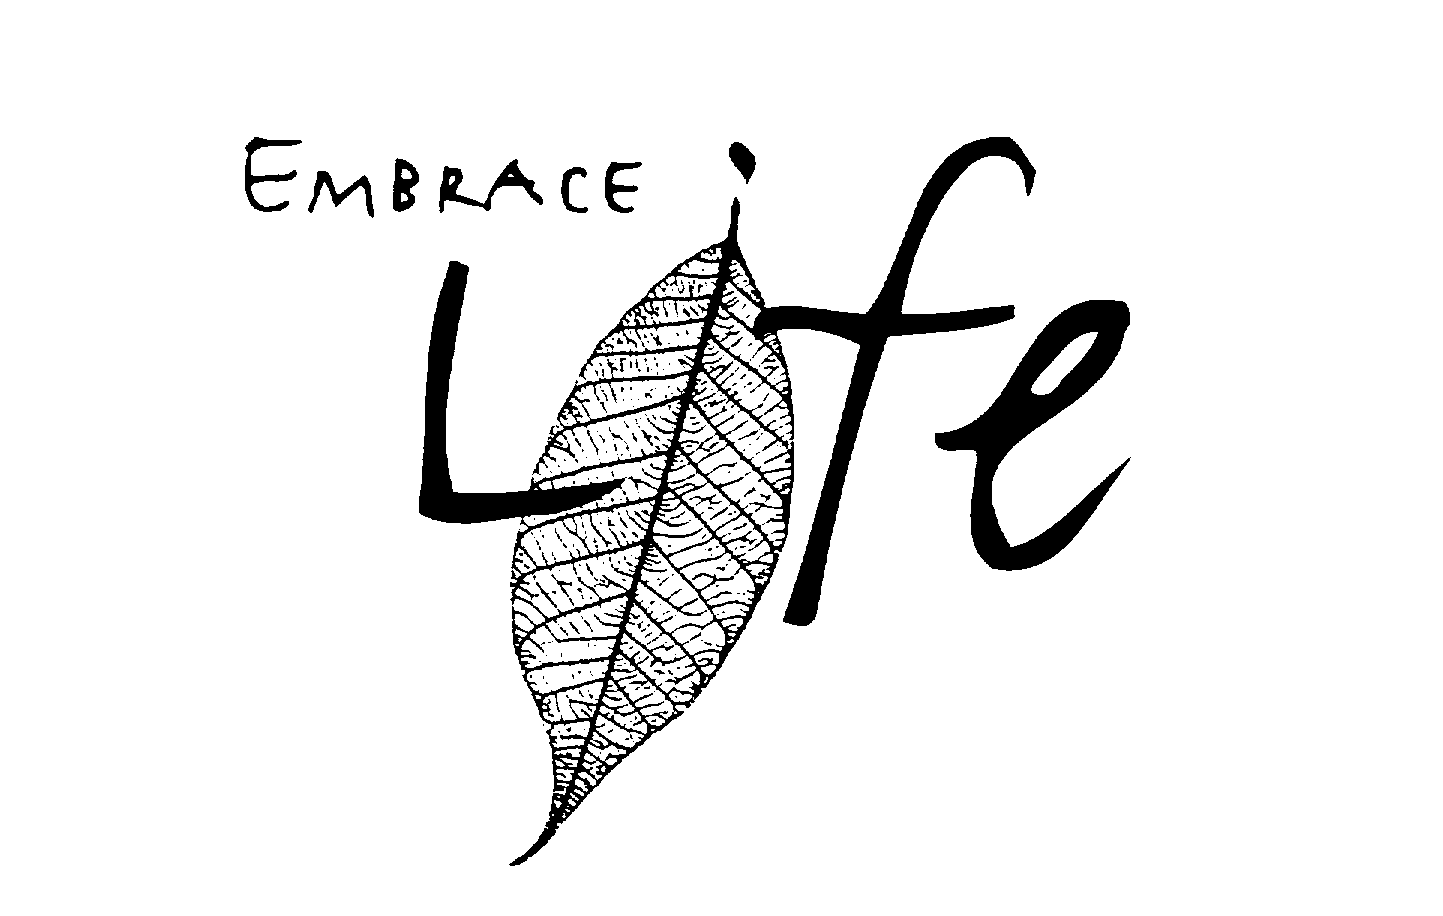  EMBRACE LIFE